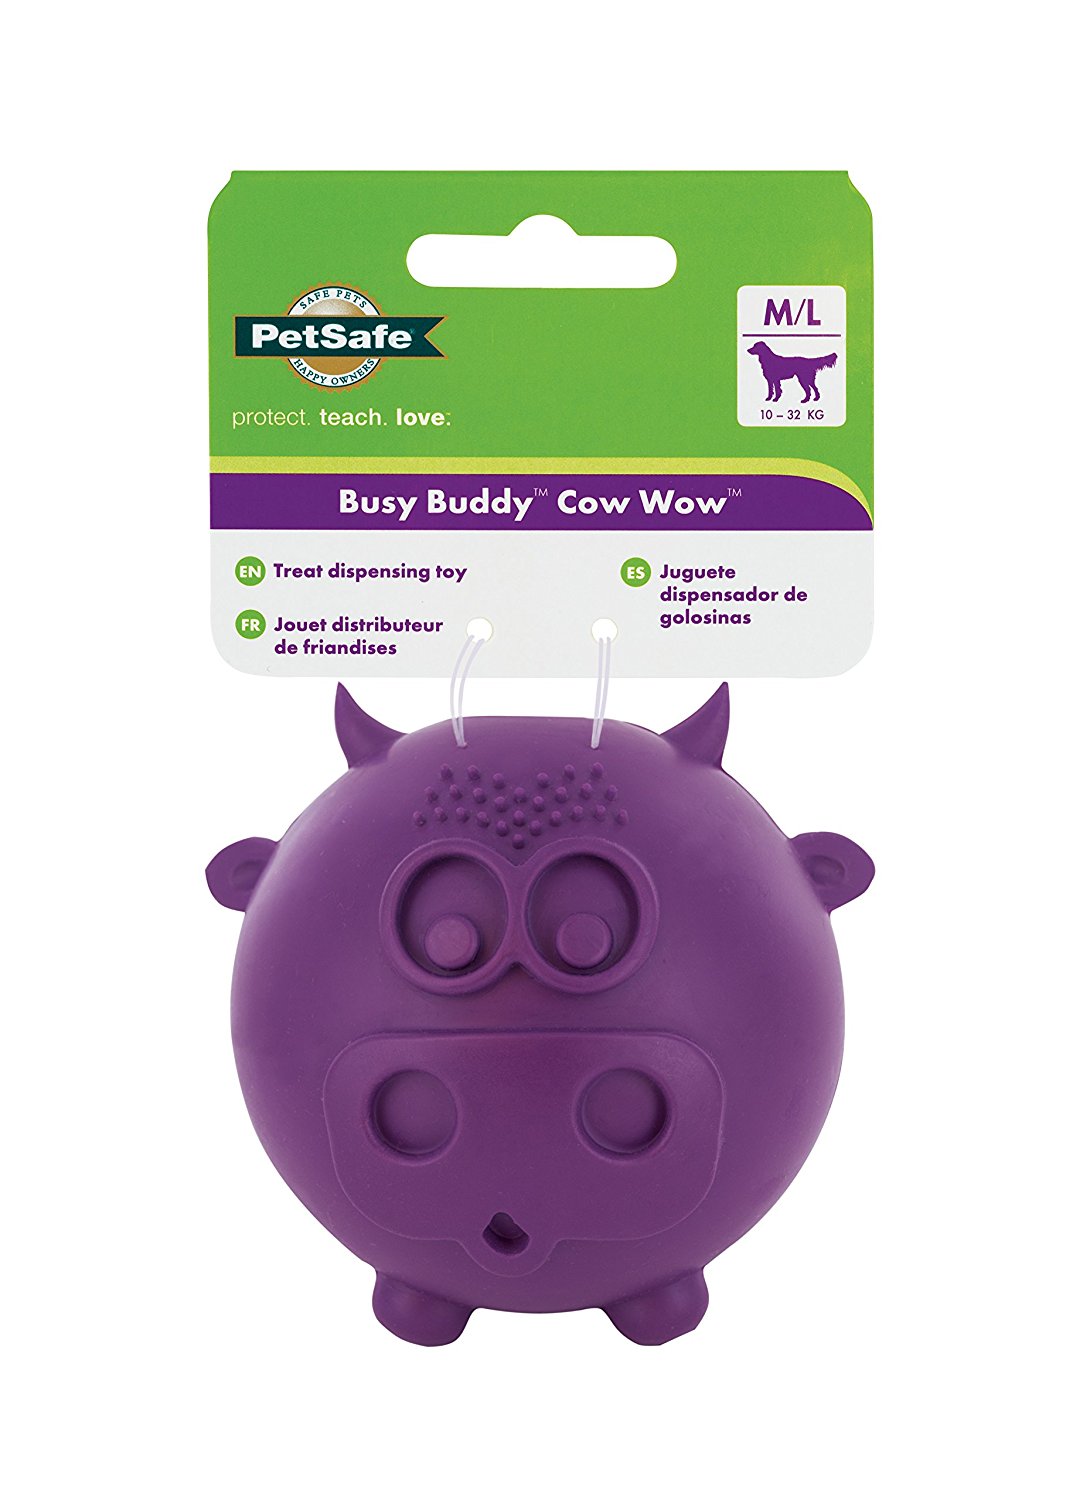 PetSafe jouets pour chien Moyen/Grand Busy buddy cow wow jouet distributeur de gâteries